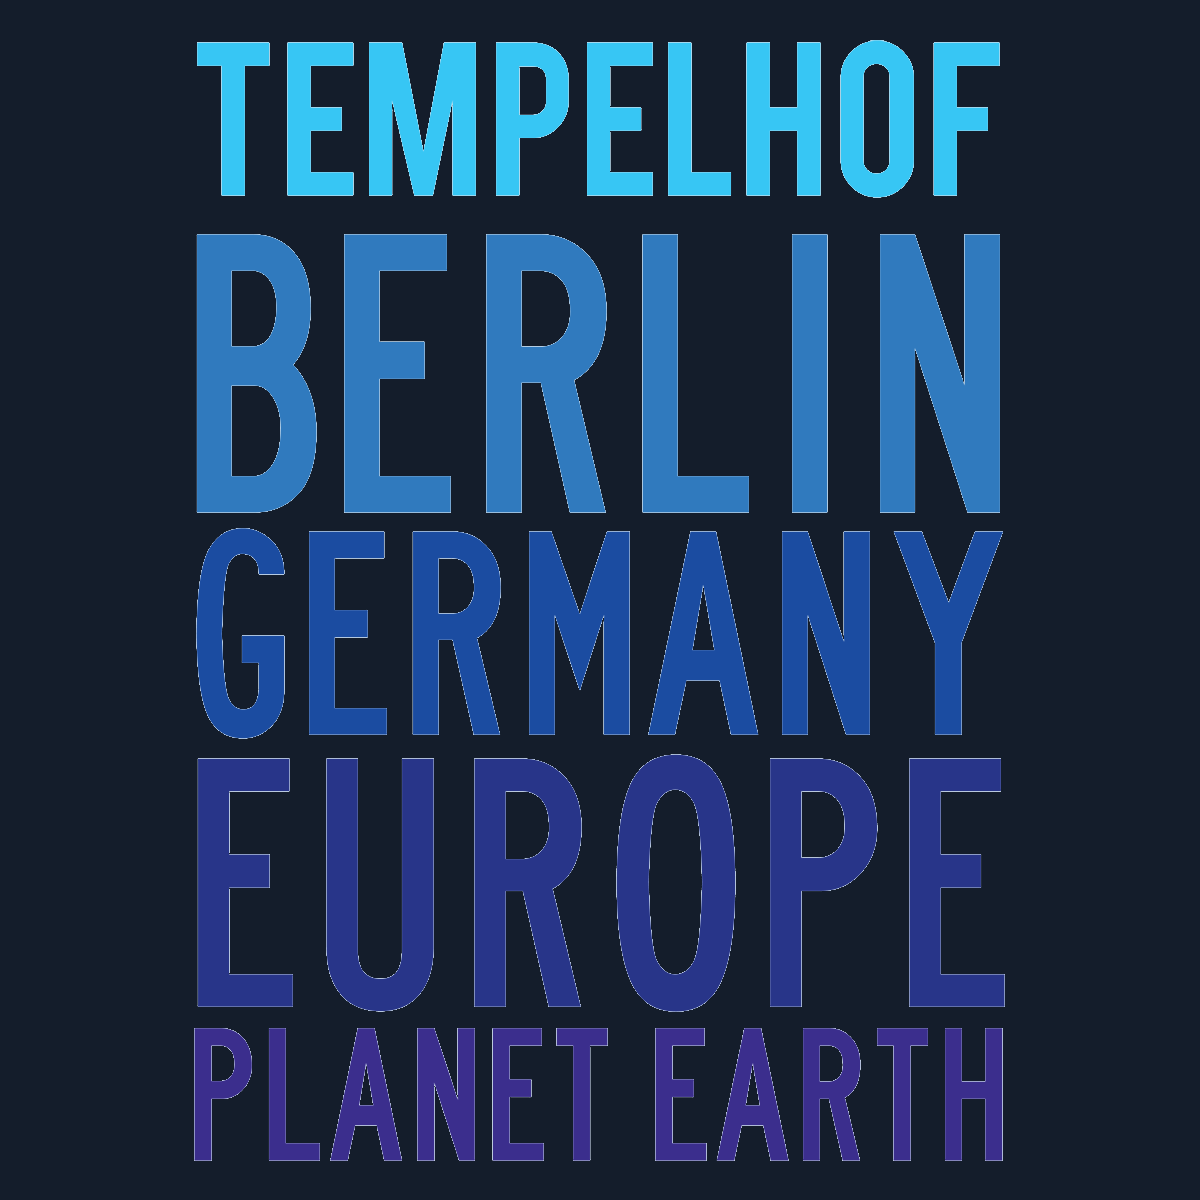 Tempelhof Planet Earth